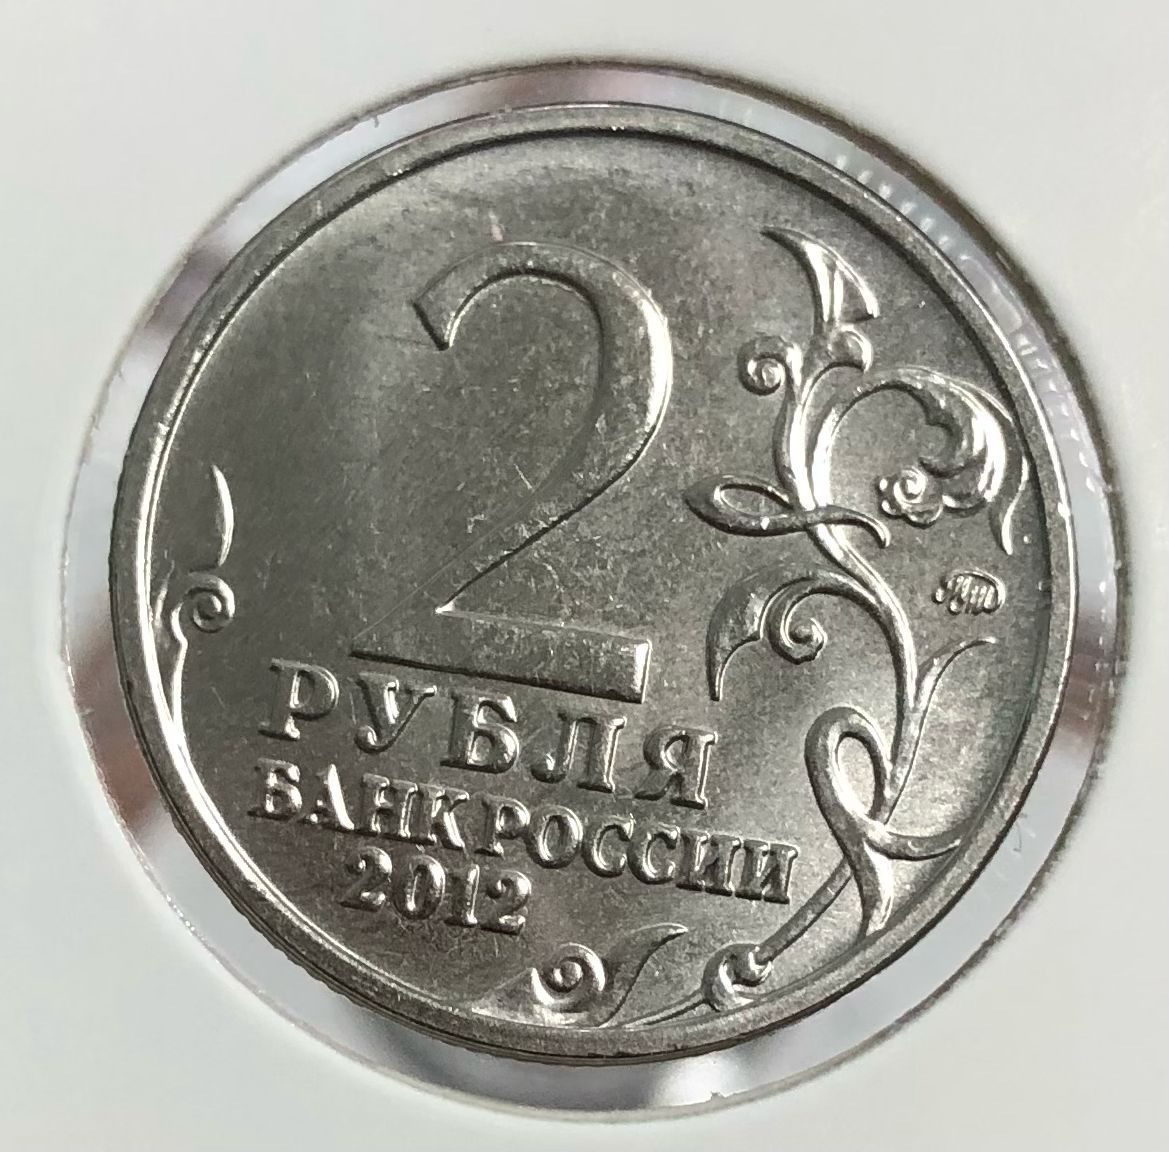 Рубль сум россия. Монета 2 рубля 2012. 2 Рубля 2012 м.и.Платов. 2 Рубля Платов. 2 Рубля фото.